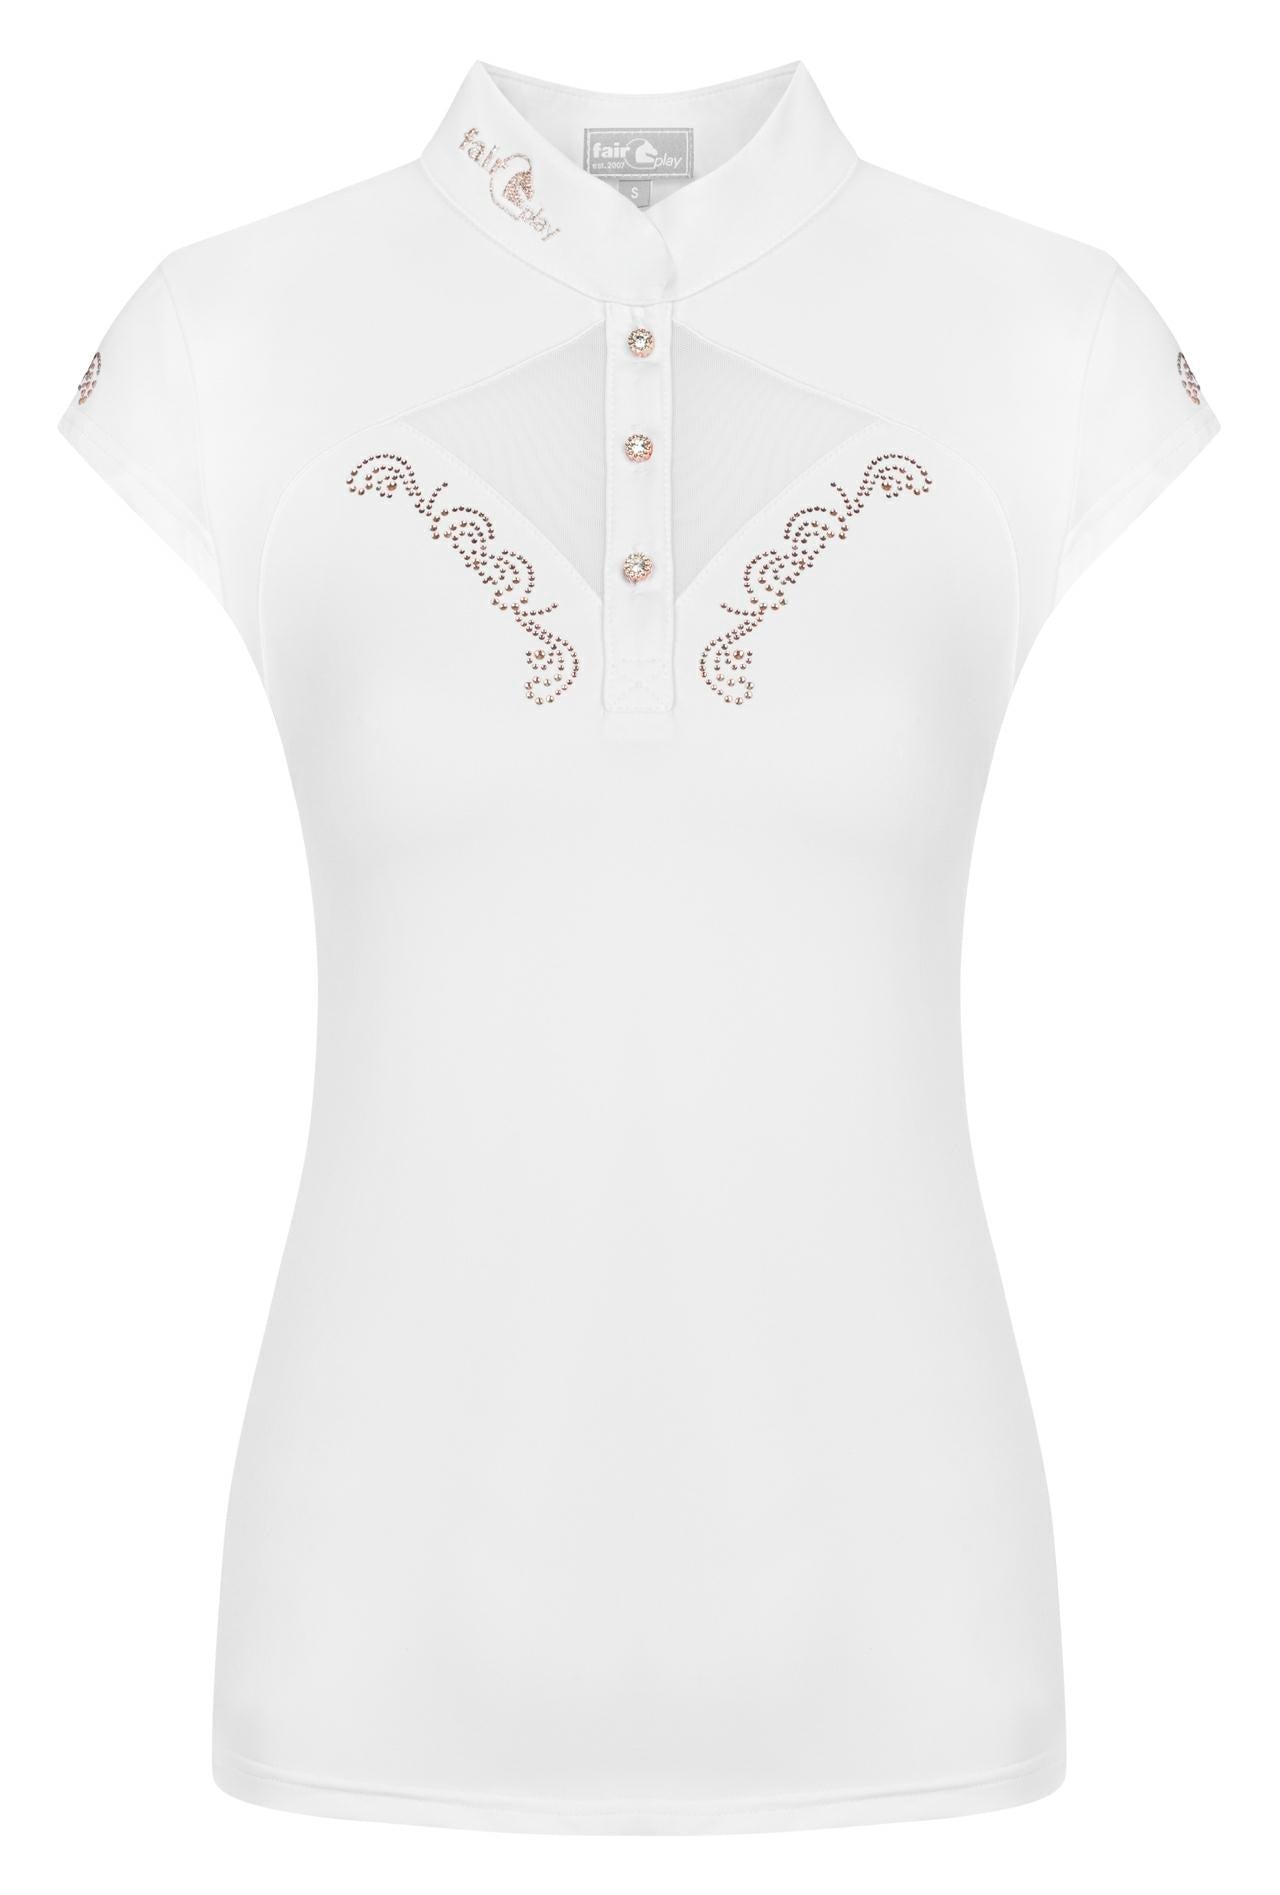 Fairplay Cathrine Rosegold Sleeveless Competition Shirt